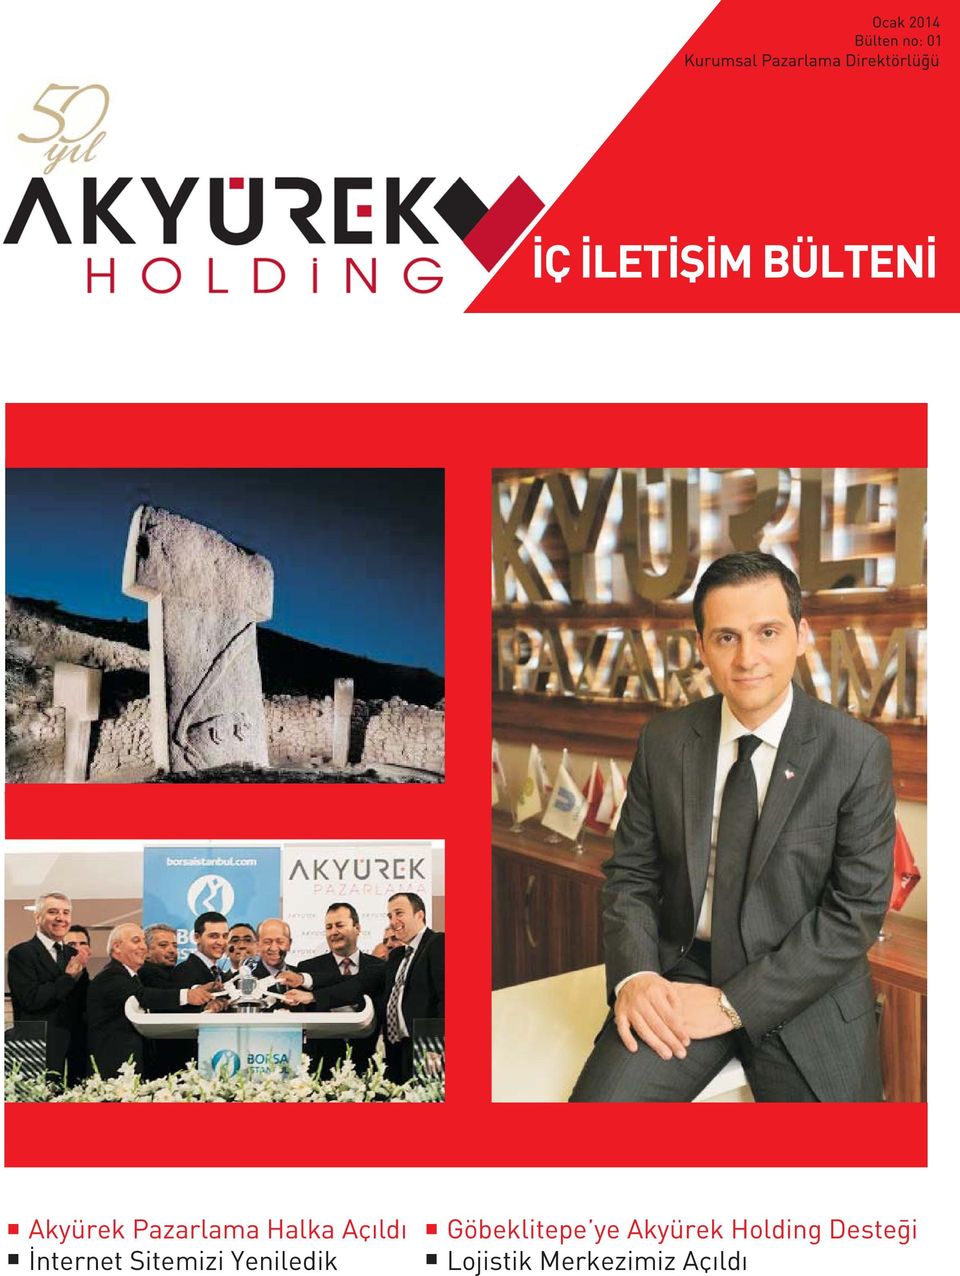 Göbeklitepe ye Akyürek Holding